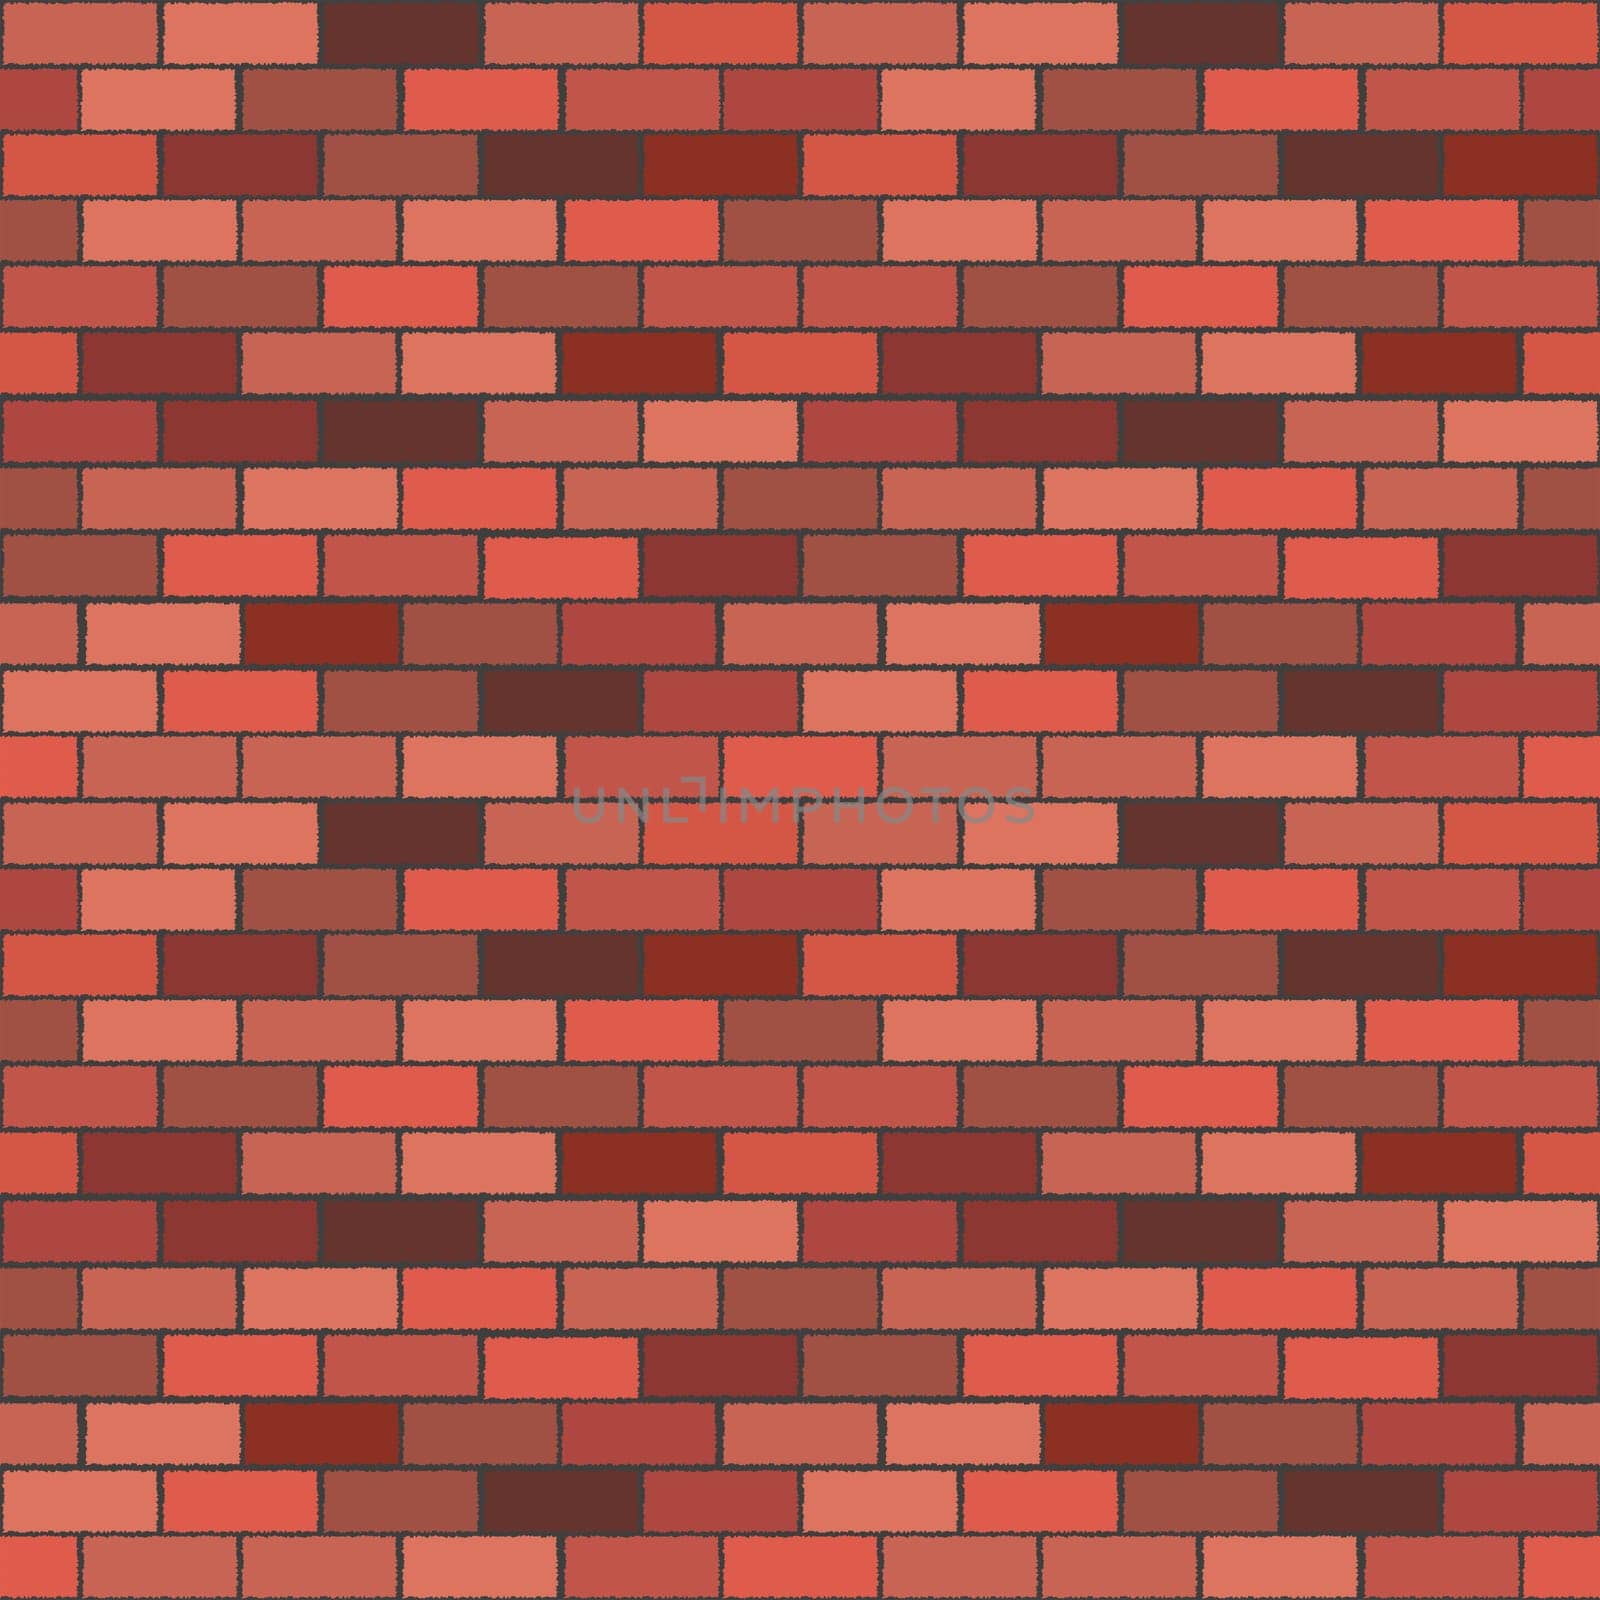 Red brick wall seamless pattern by hibrida13